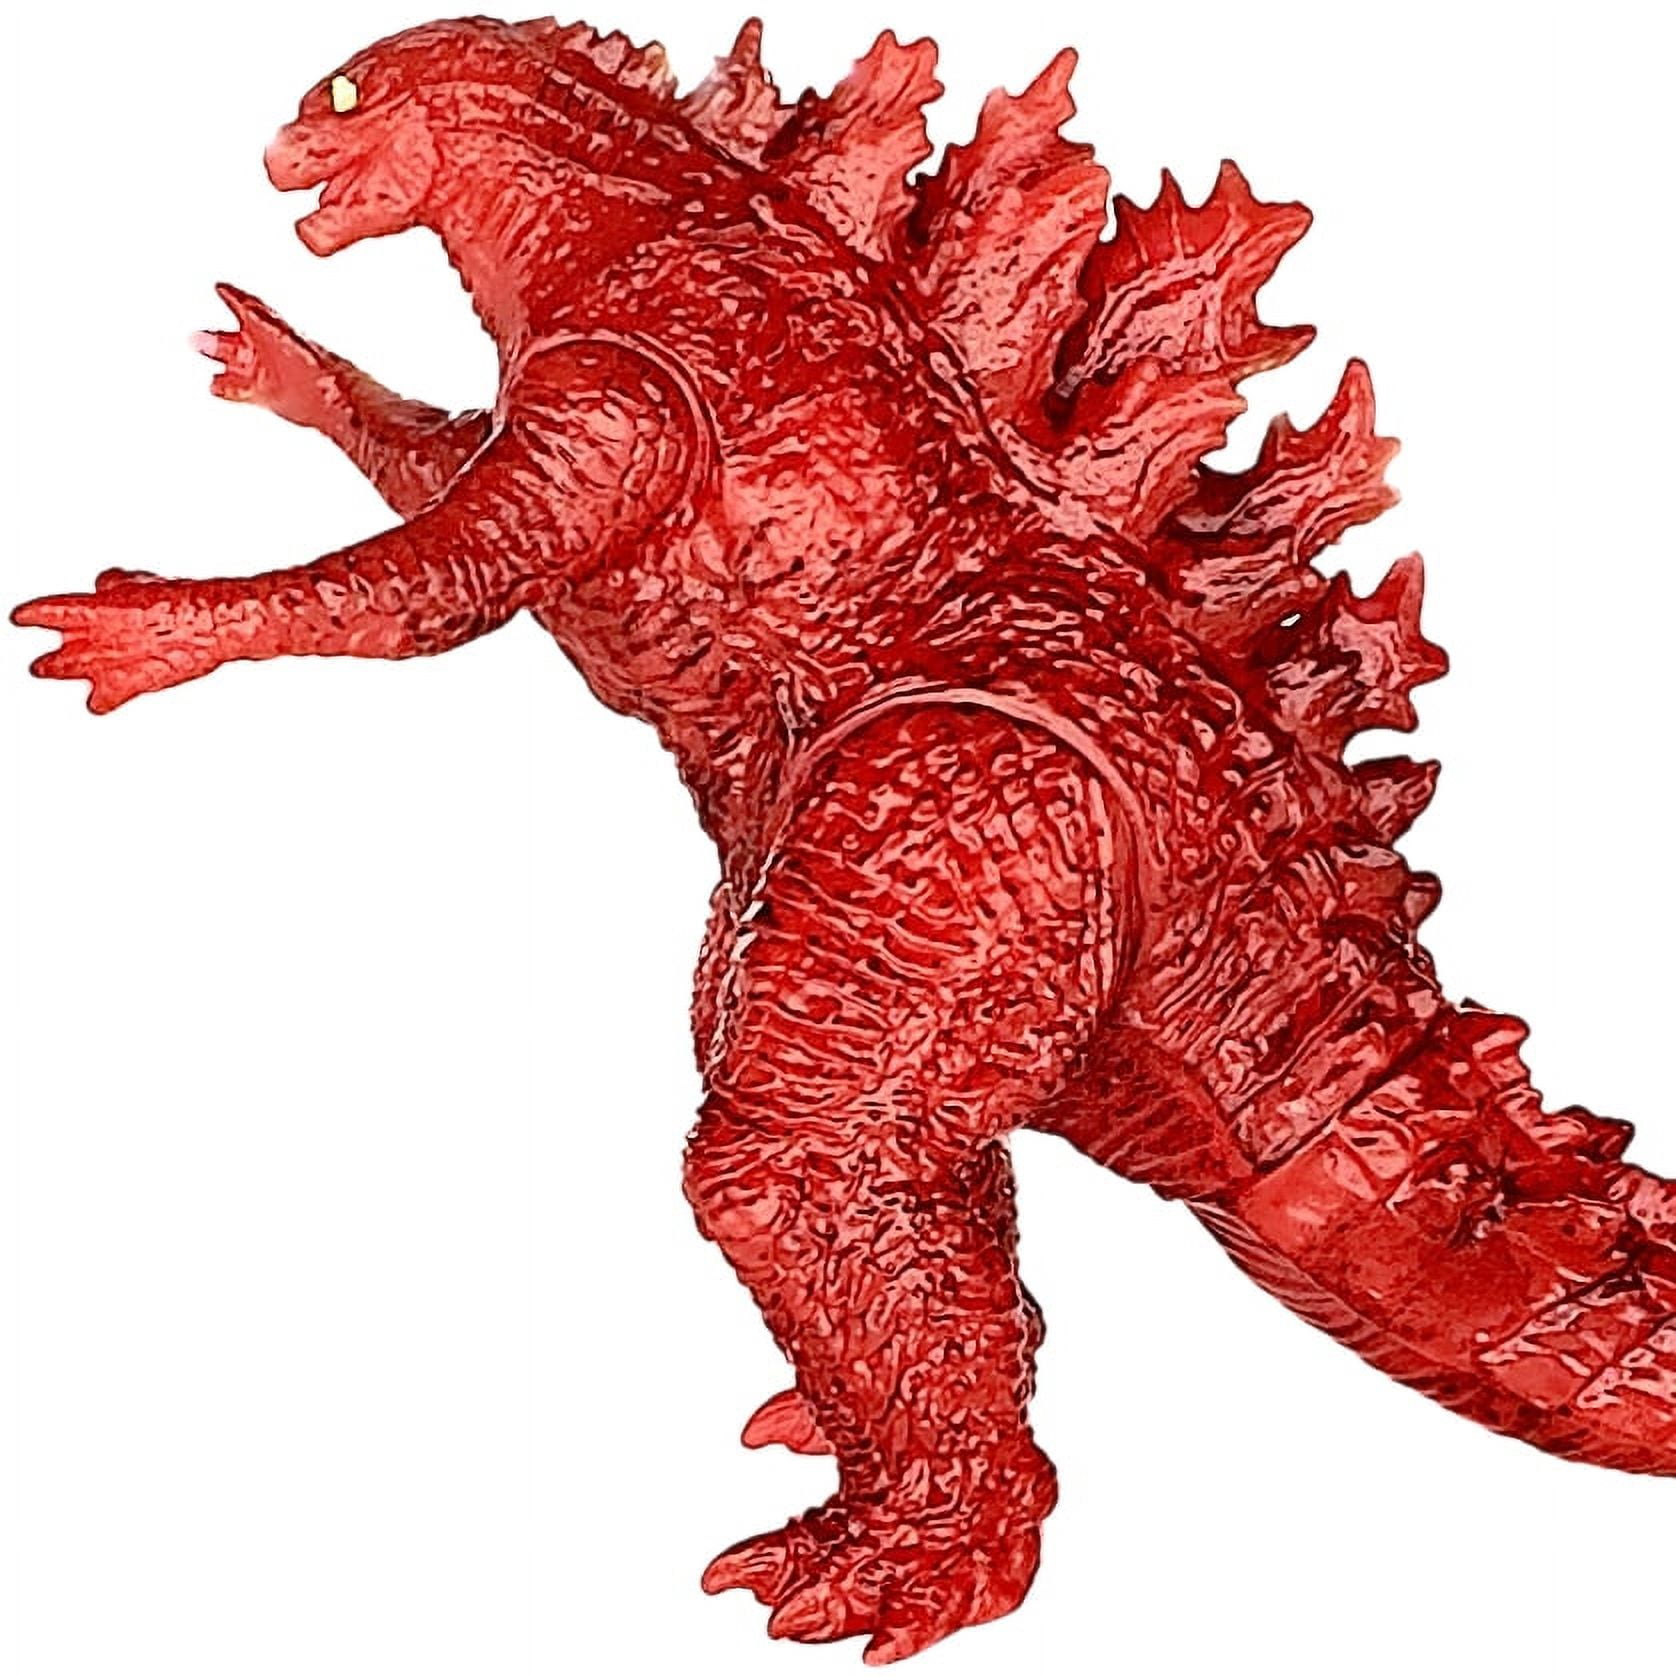 Godzilla Bandai Action Figure, Backpack Action Figure